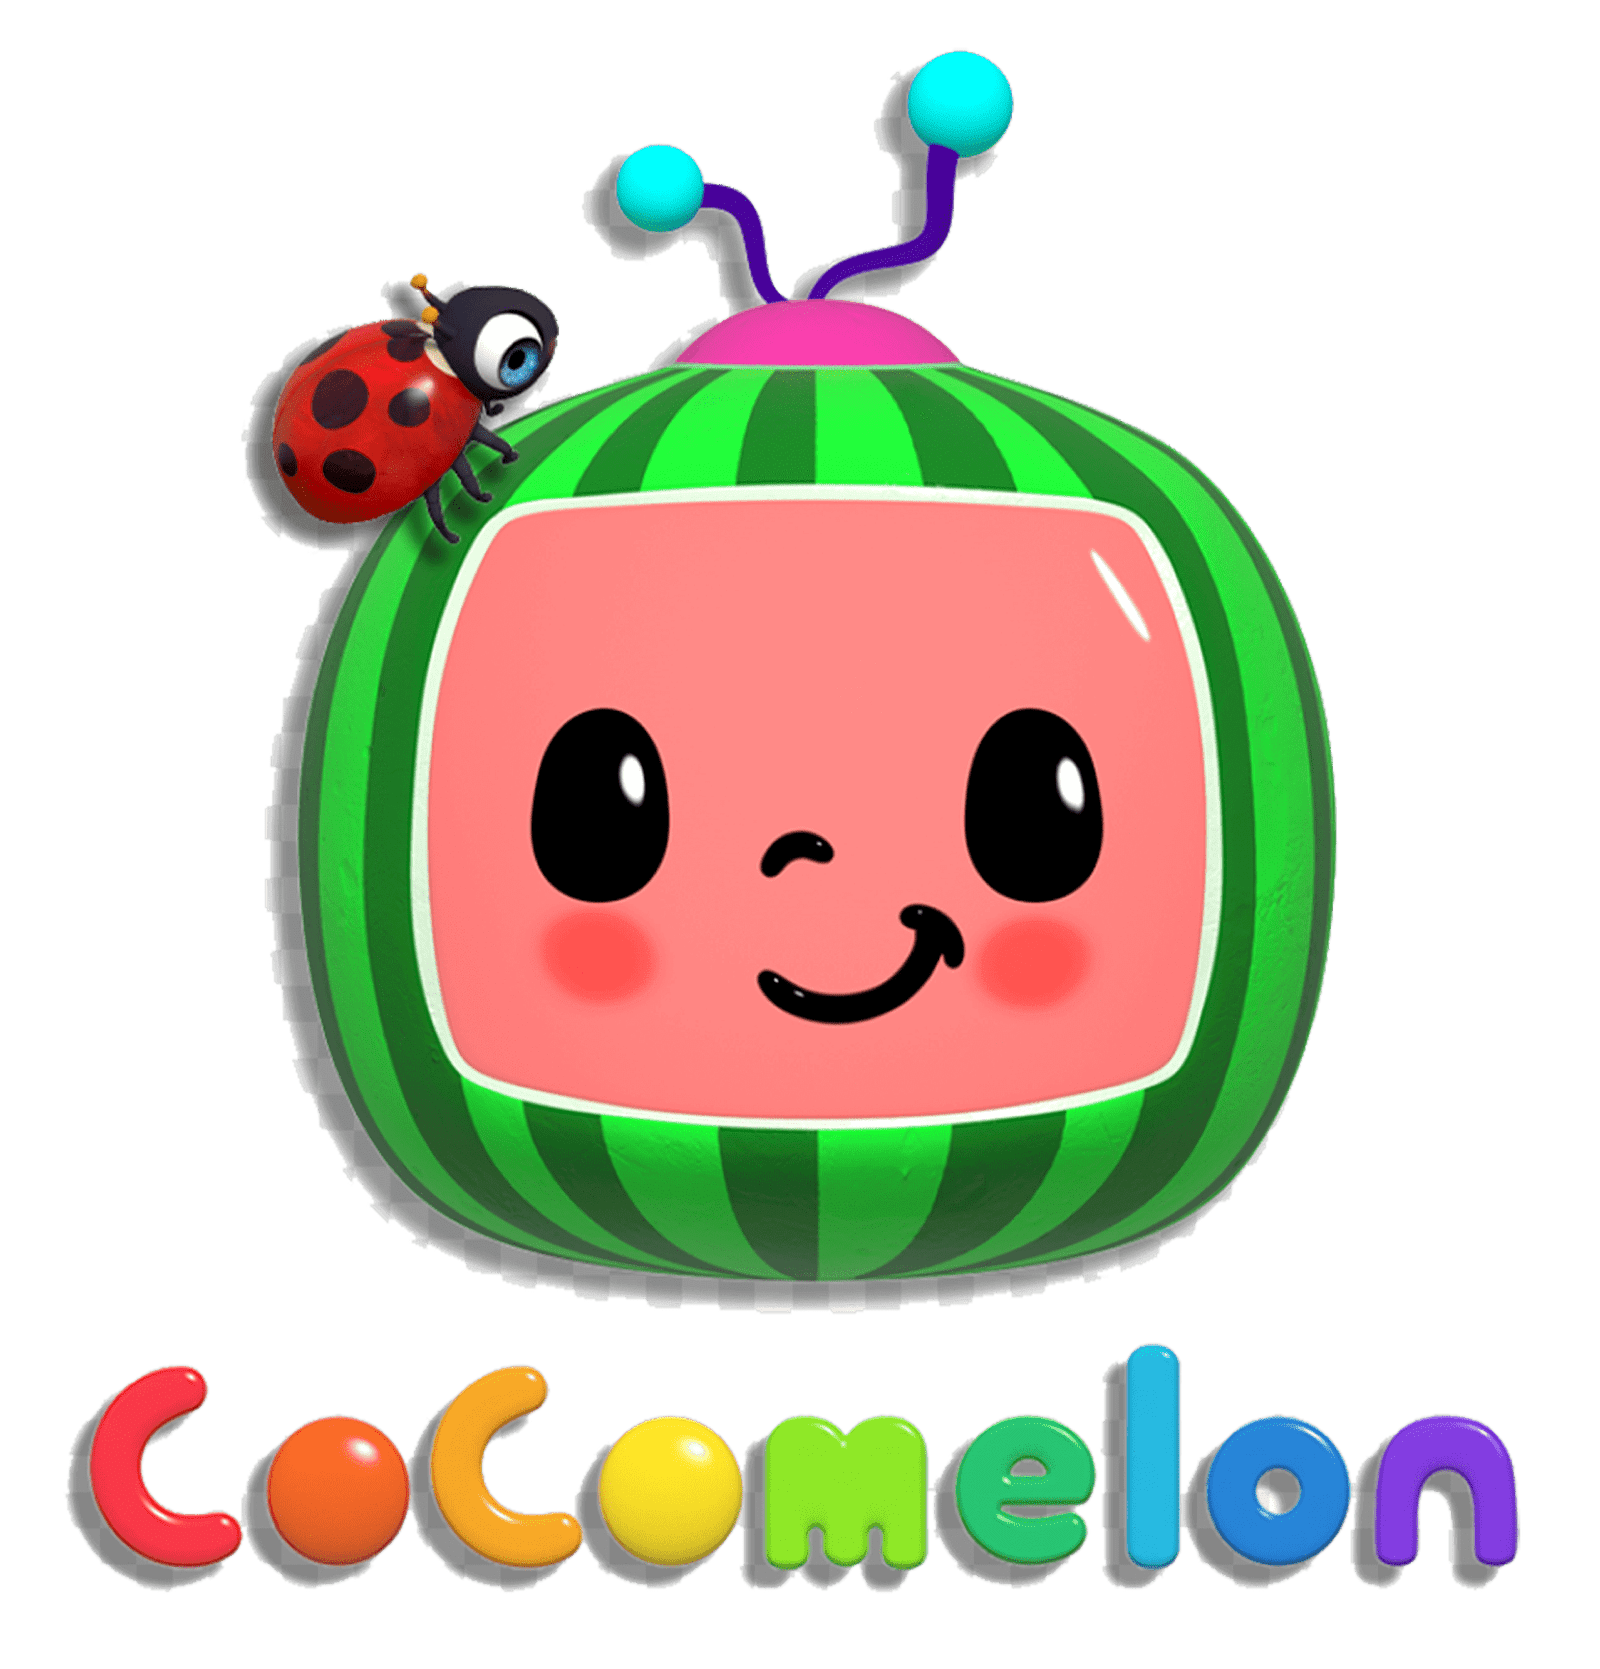 CoComelon Logo and Its History | LogoMyWay